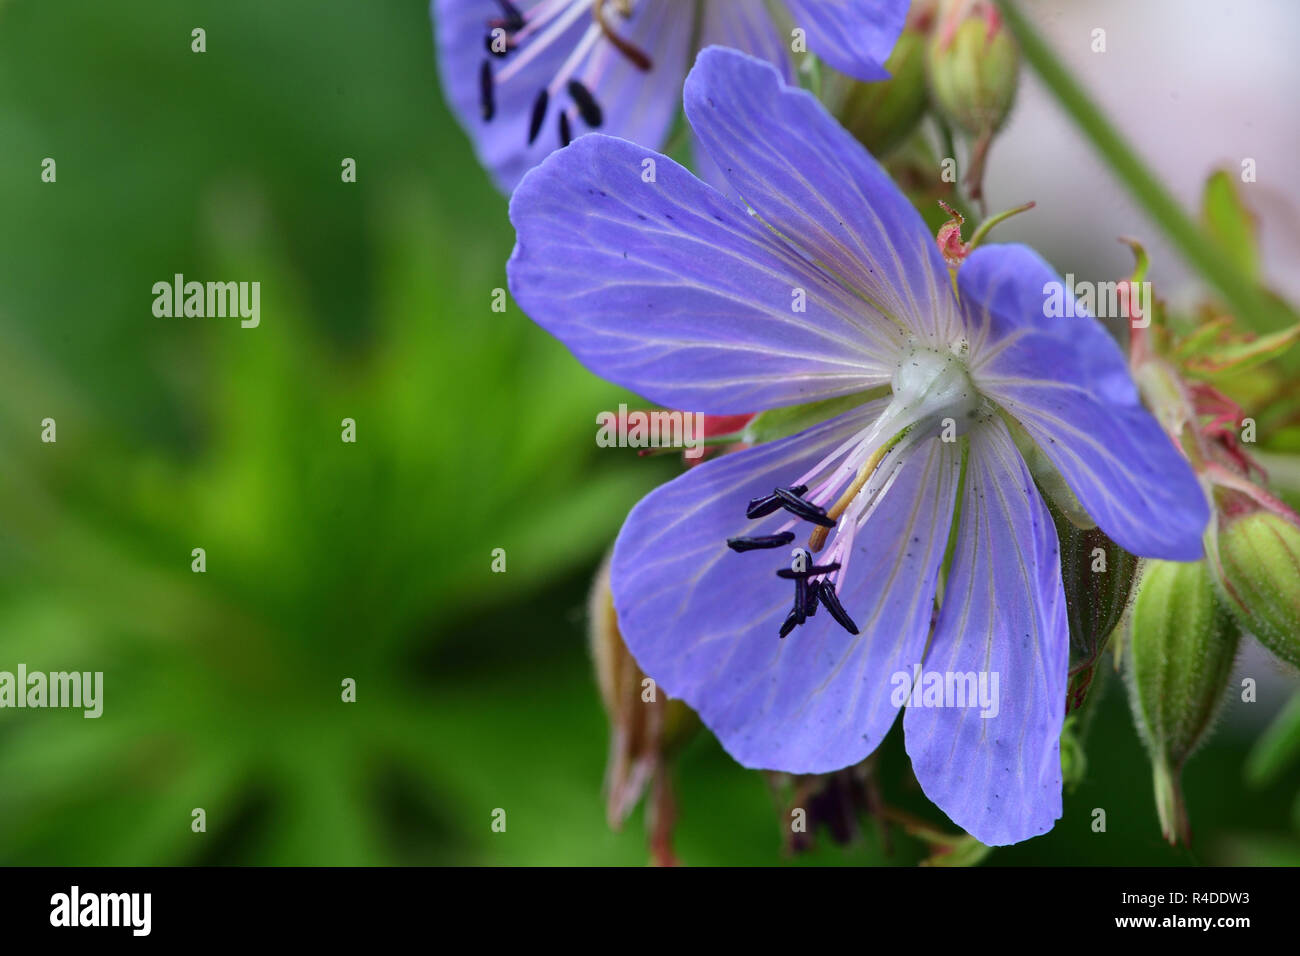 Maccro shot of a liliac coloured geranium flower in bloom Stock Photo